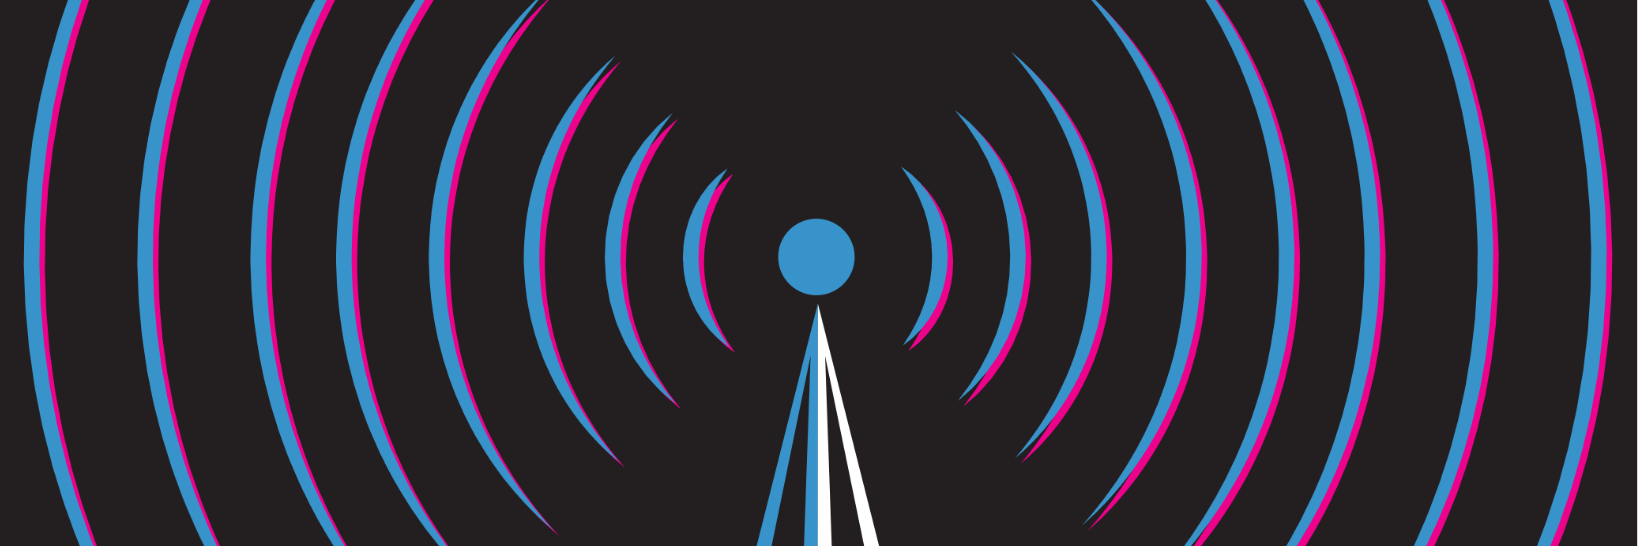 How Fast Radio Waves Travel